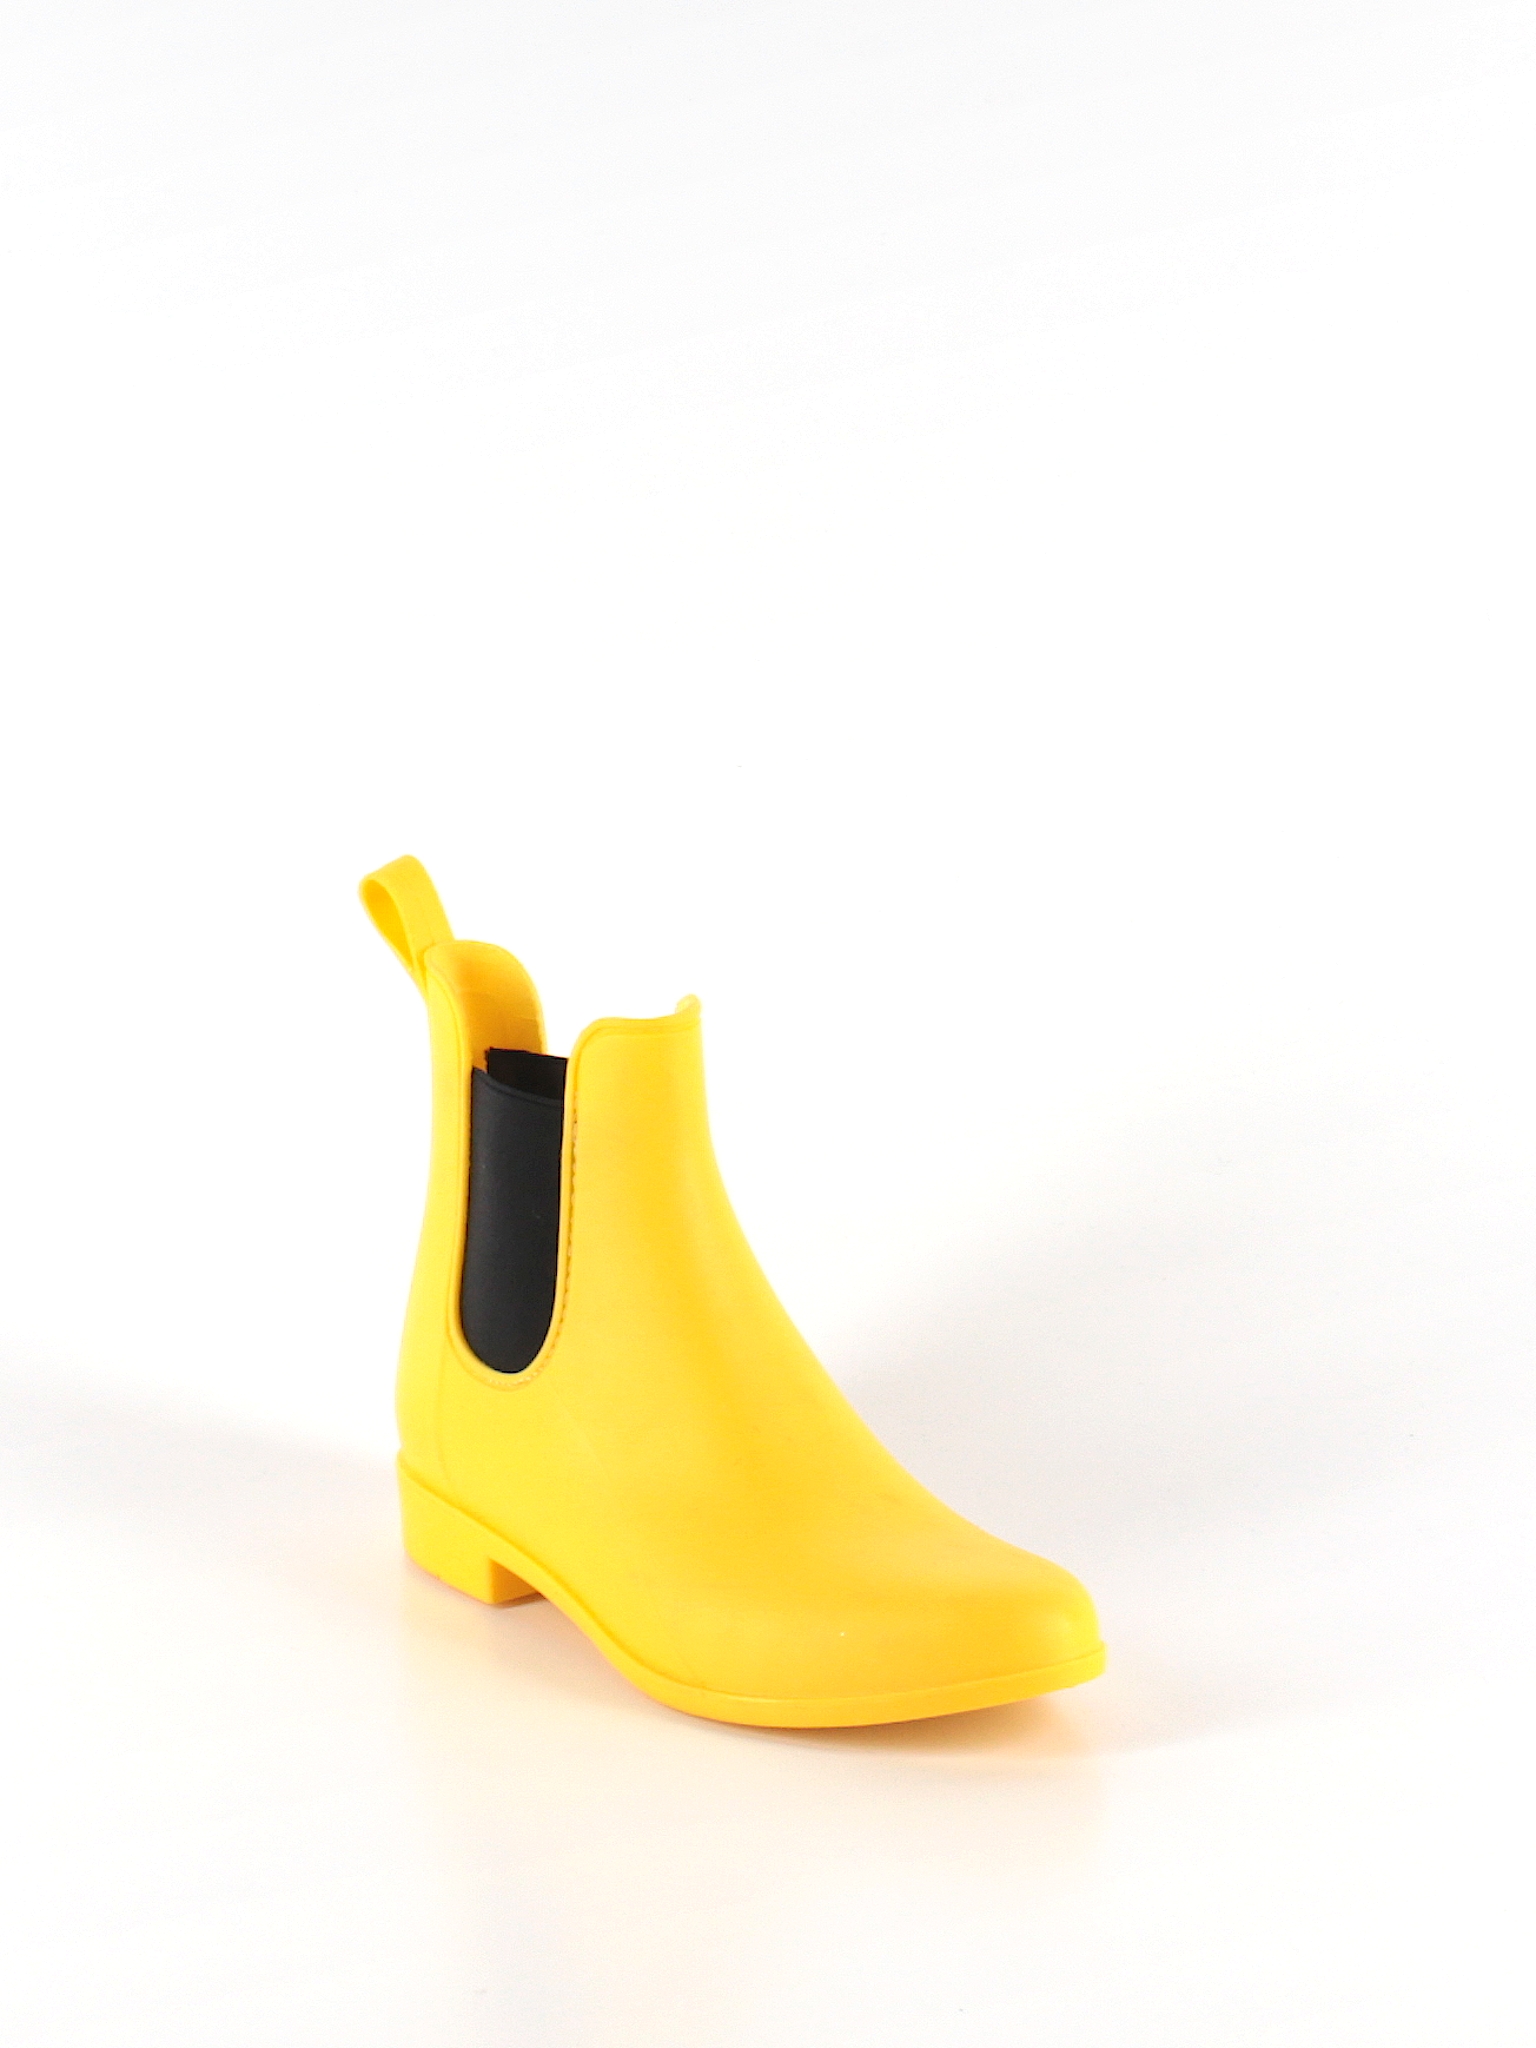 J.Crew Solid Yellow Rain Boots Size 8 - 62% off | thredUP